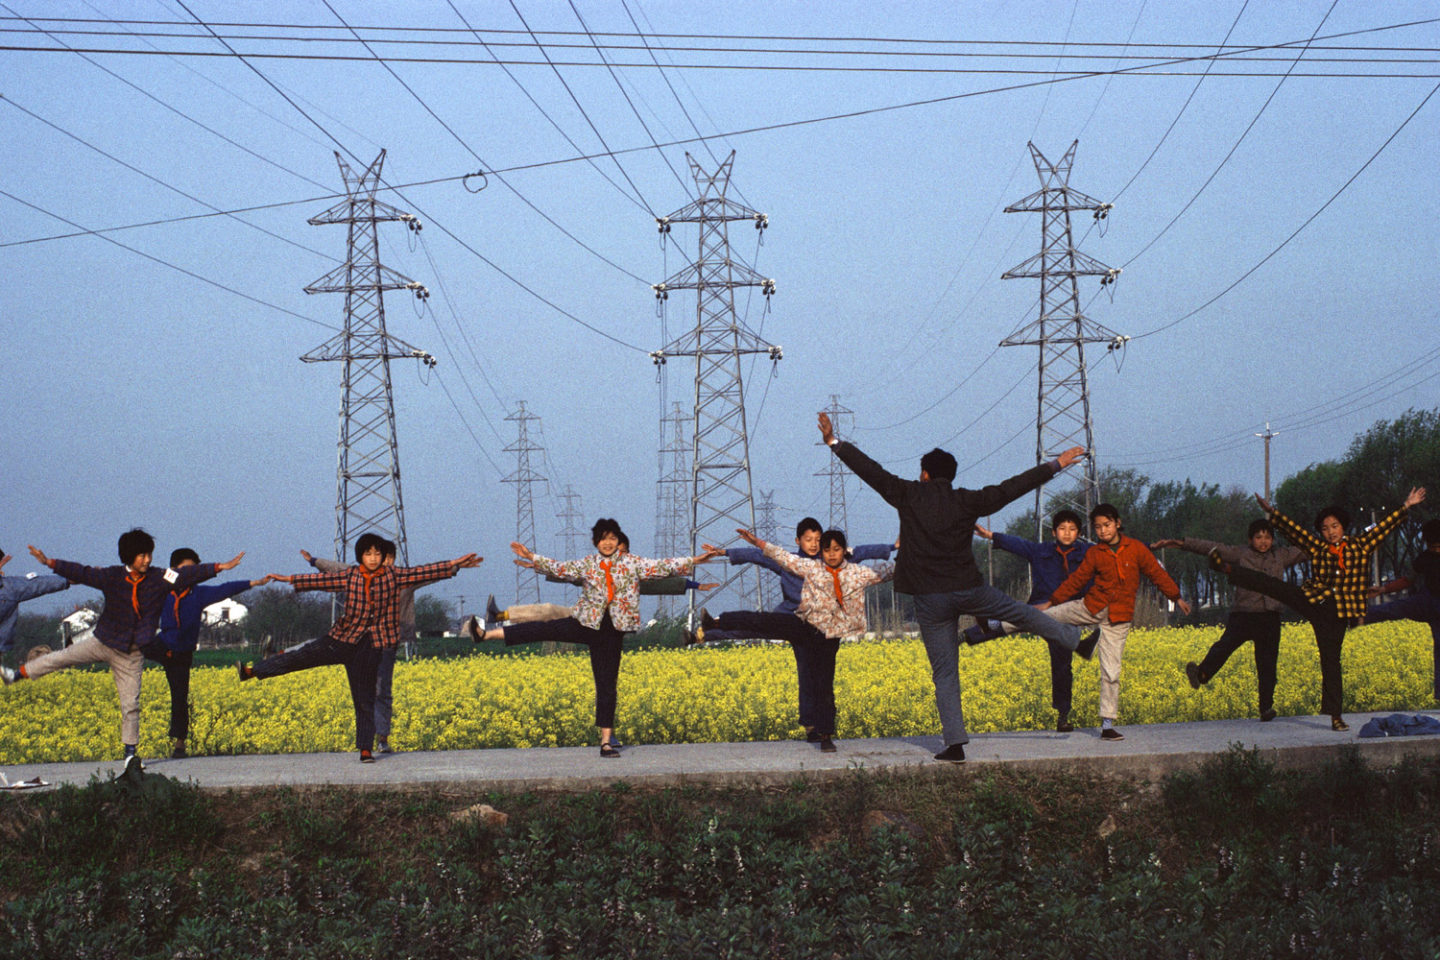 Gymnastique matinale avant l'école, Shanghai, Chine, 1980 ©Bruno Barbey, Magnum